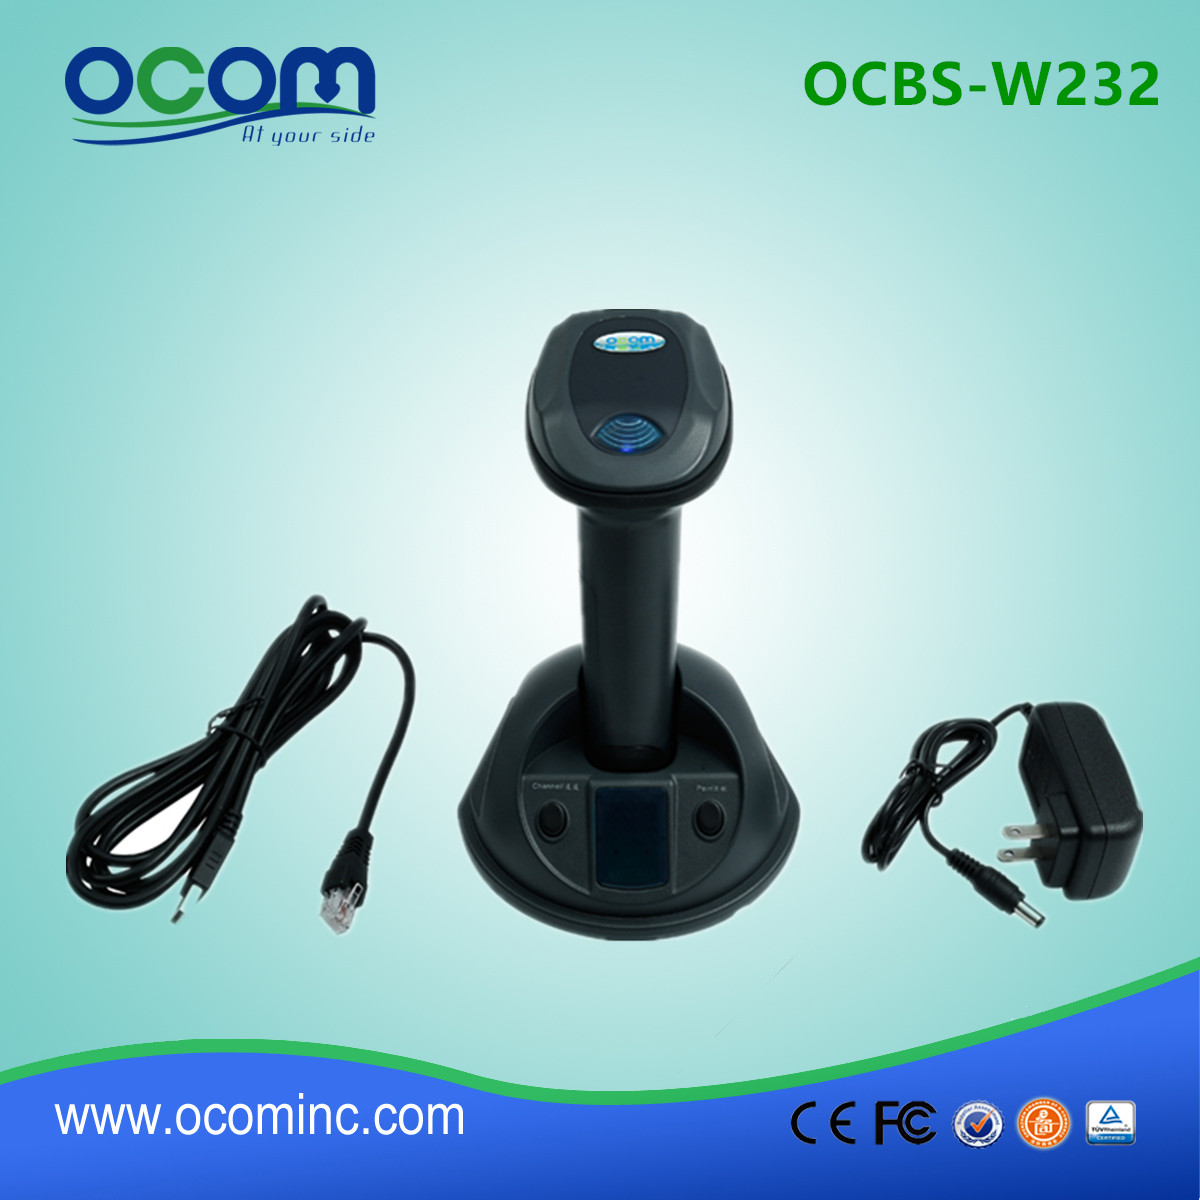 OCBS-W232-Νέος σχεδιασμός 2δ ασύρματο σαρωτή γραμμωτού κώδικα με Bluetooth και 433MHz